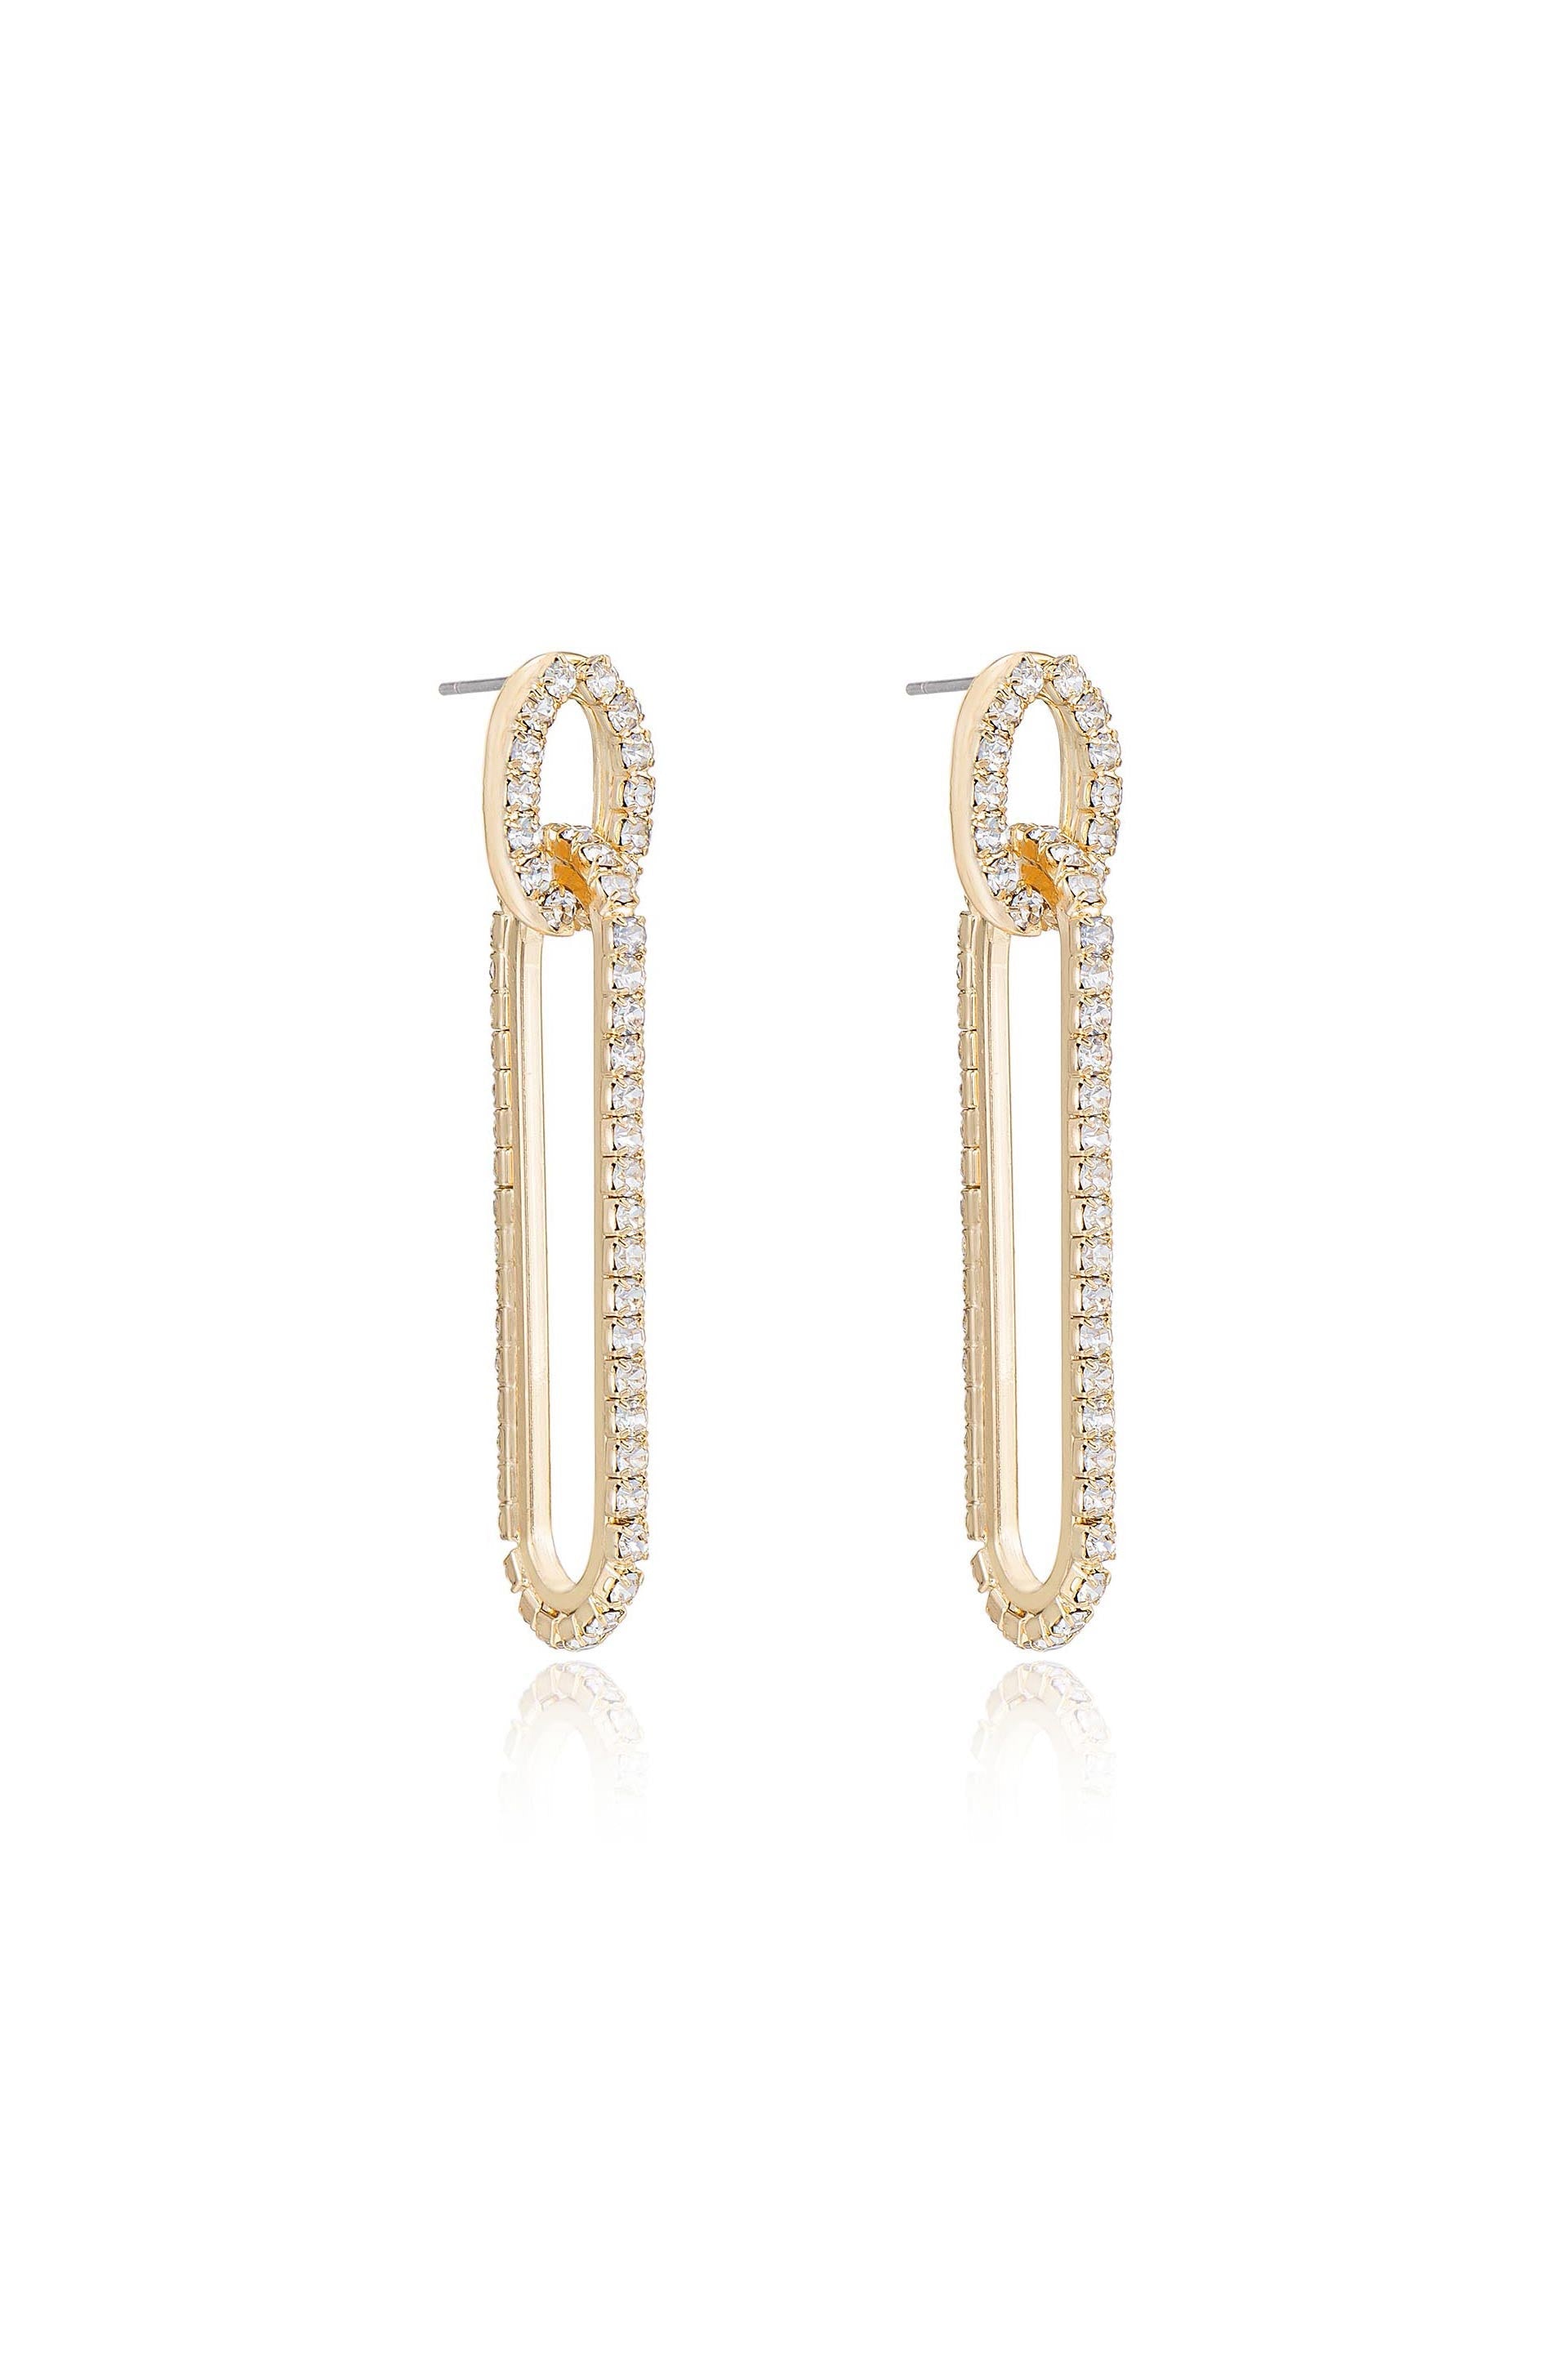 Crystal Paperclip Earrings - Premium Earrings from Ettika - Just $55! Shop now at Tooksie